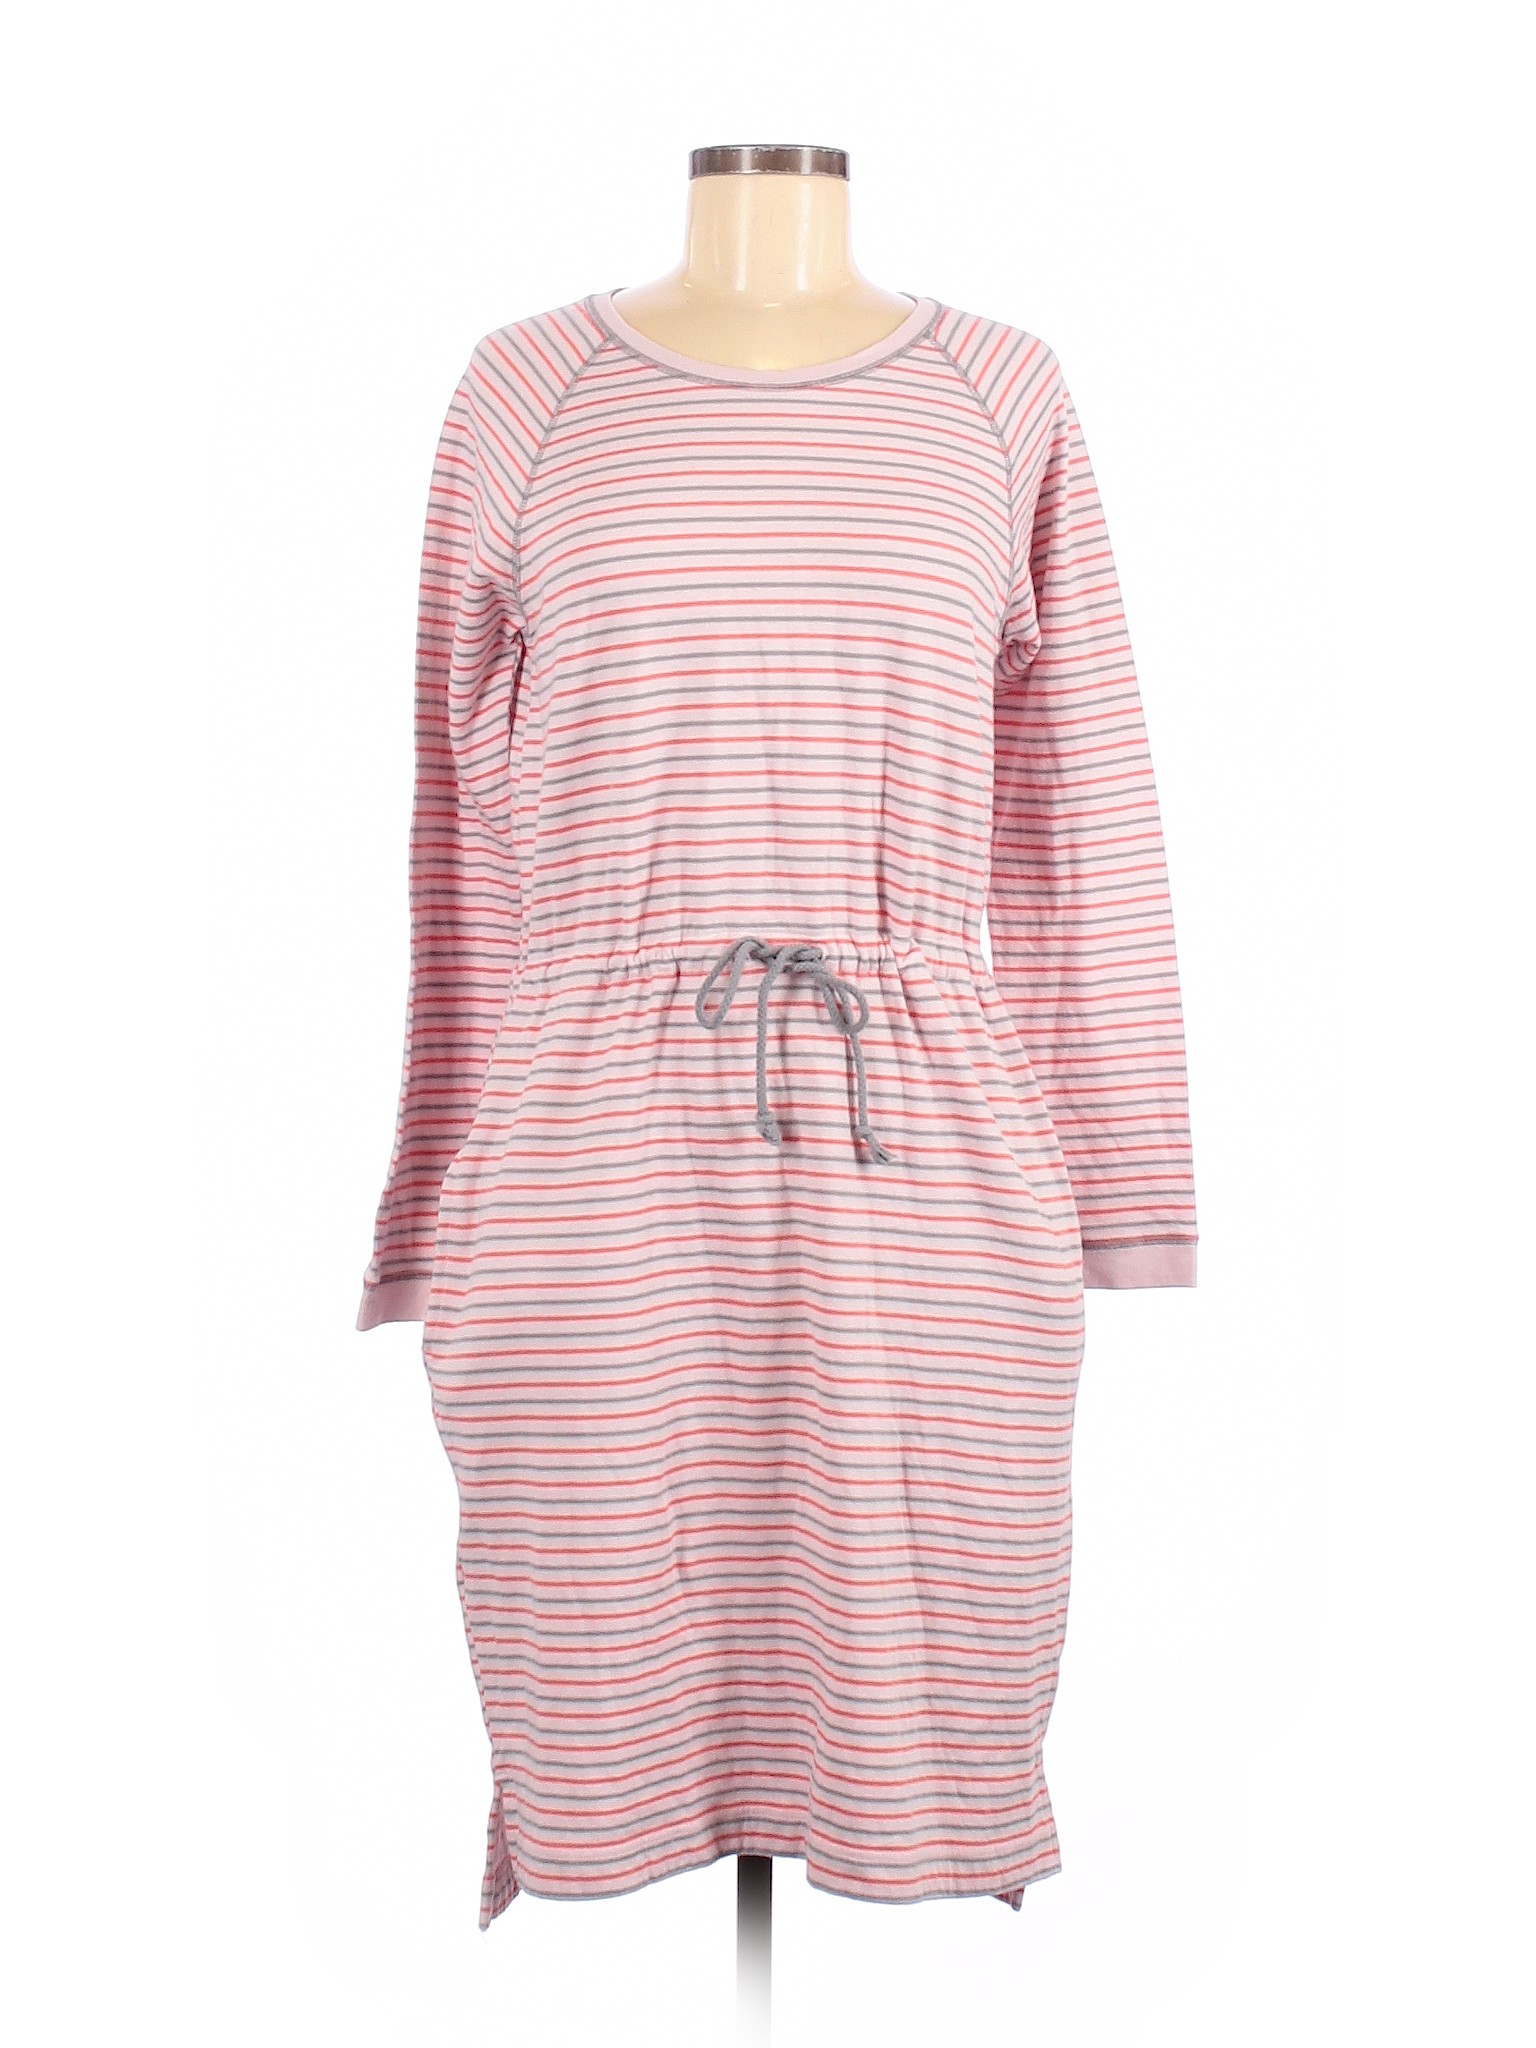 Uniqlo Women Pink Casual Dress M | eBay